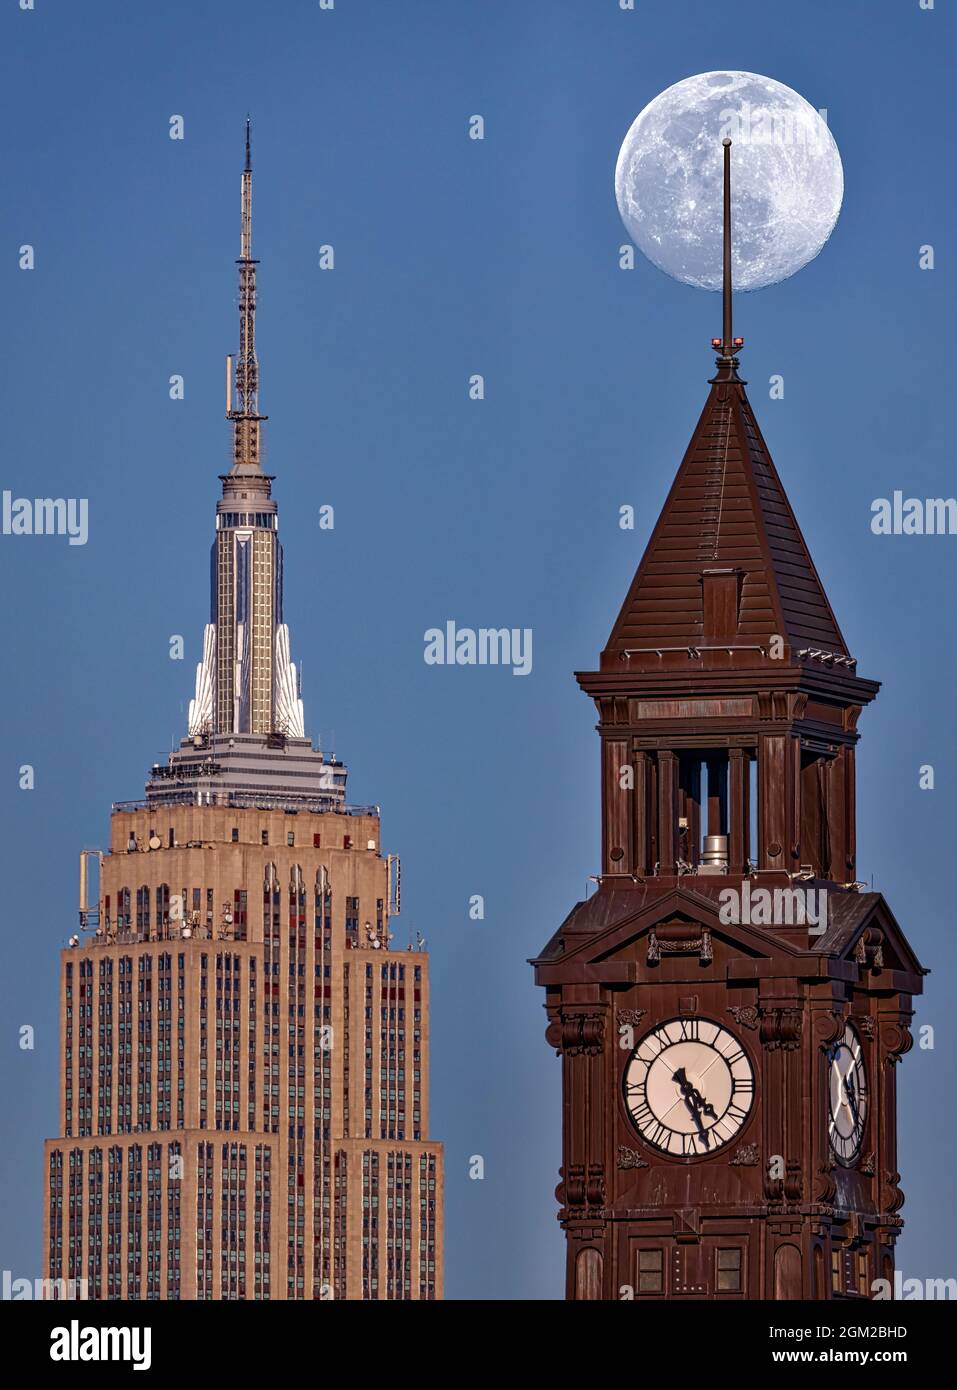 NY NJ Crossing State Lines der fast volle Schneemond erhebt sich hinter dem Lackawanna Clock Tower in Hoboken, New Jersey, und dem Empire State Building in N Stockfoto